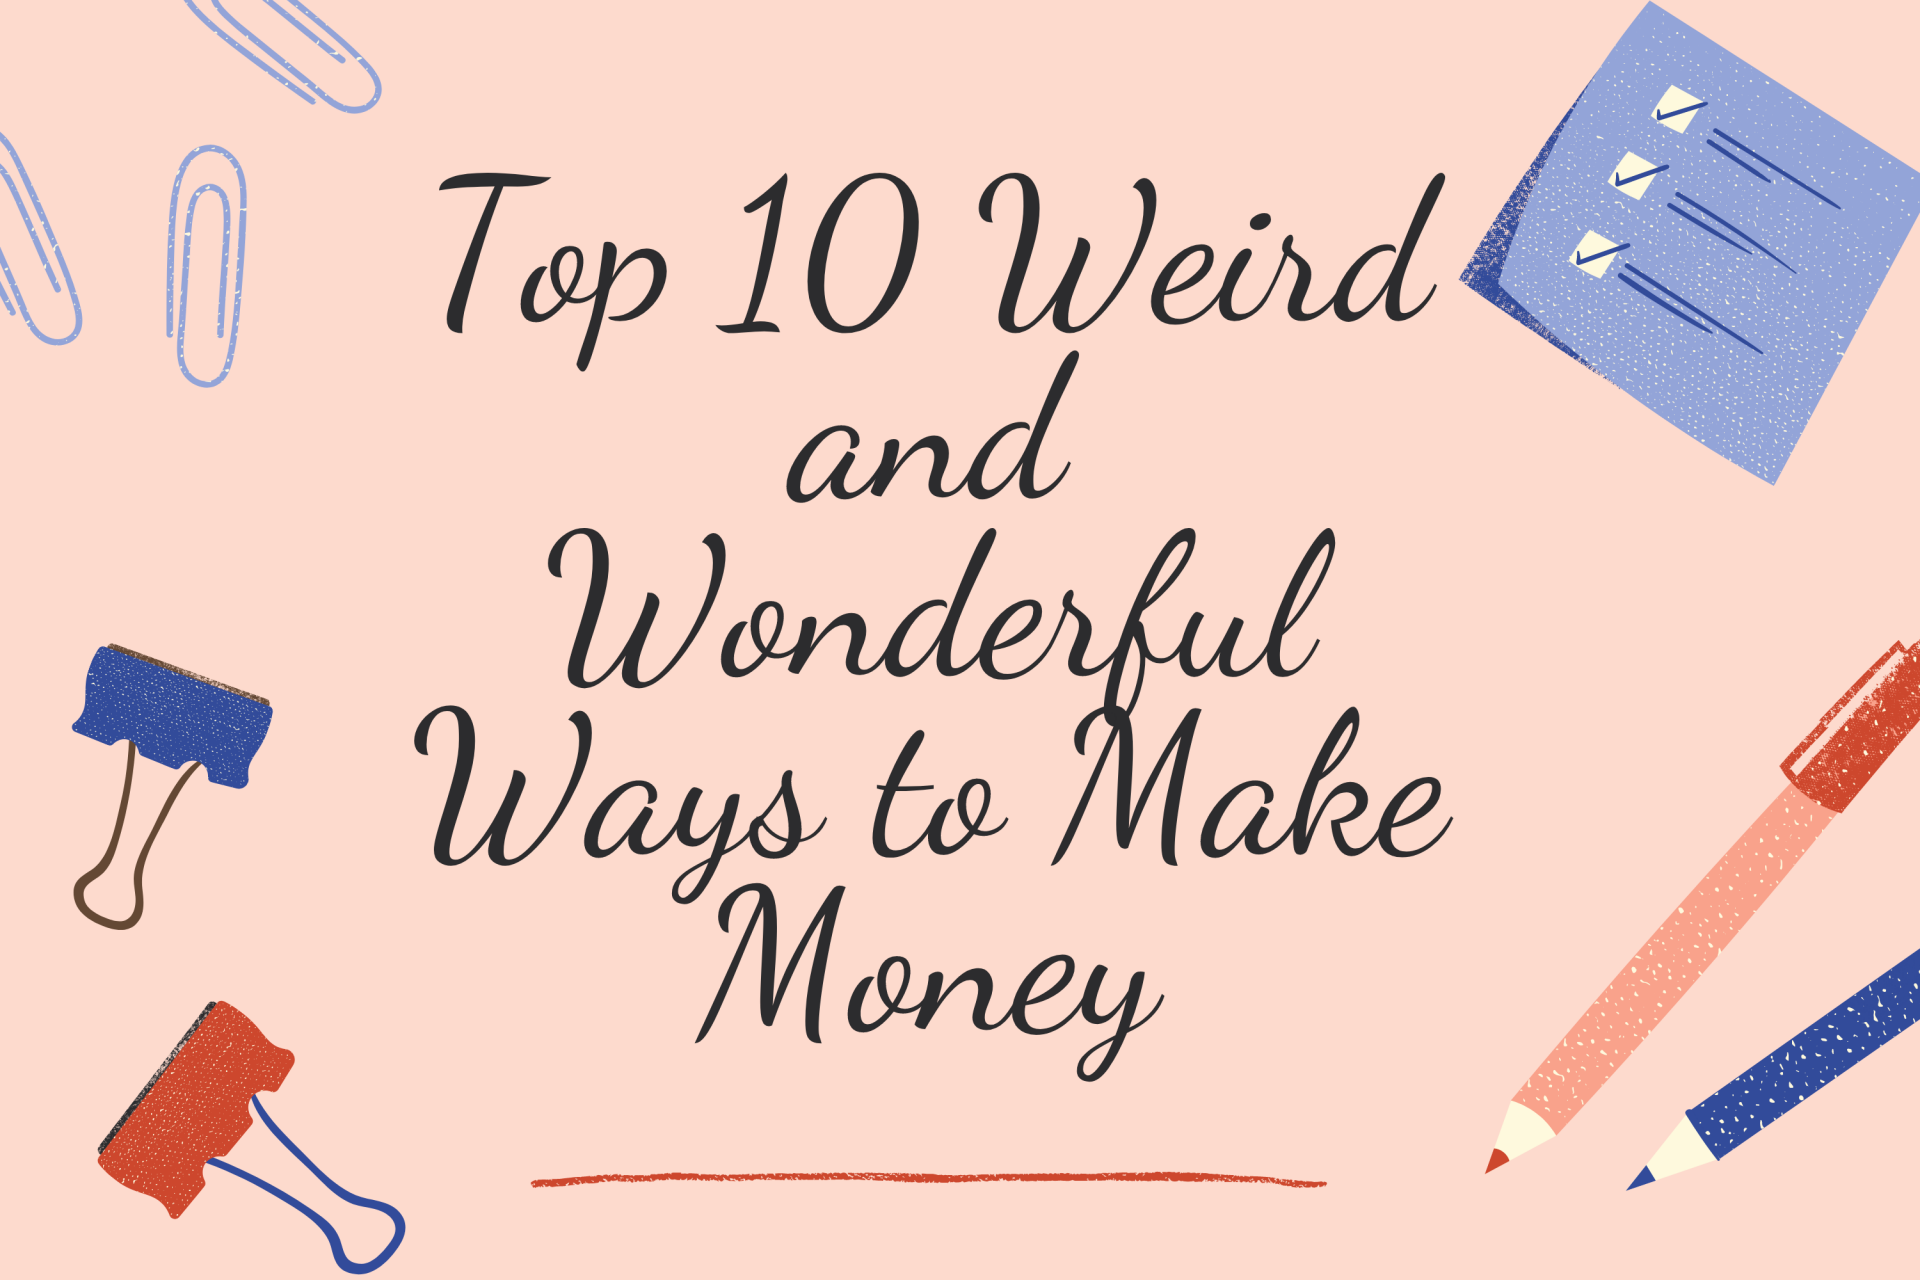 Top Bizarre and Wonderful Ways to Make Money